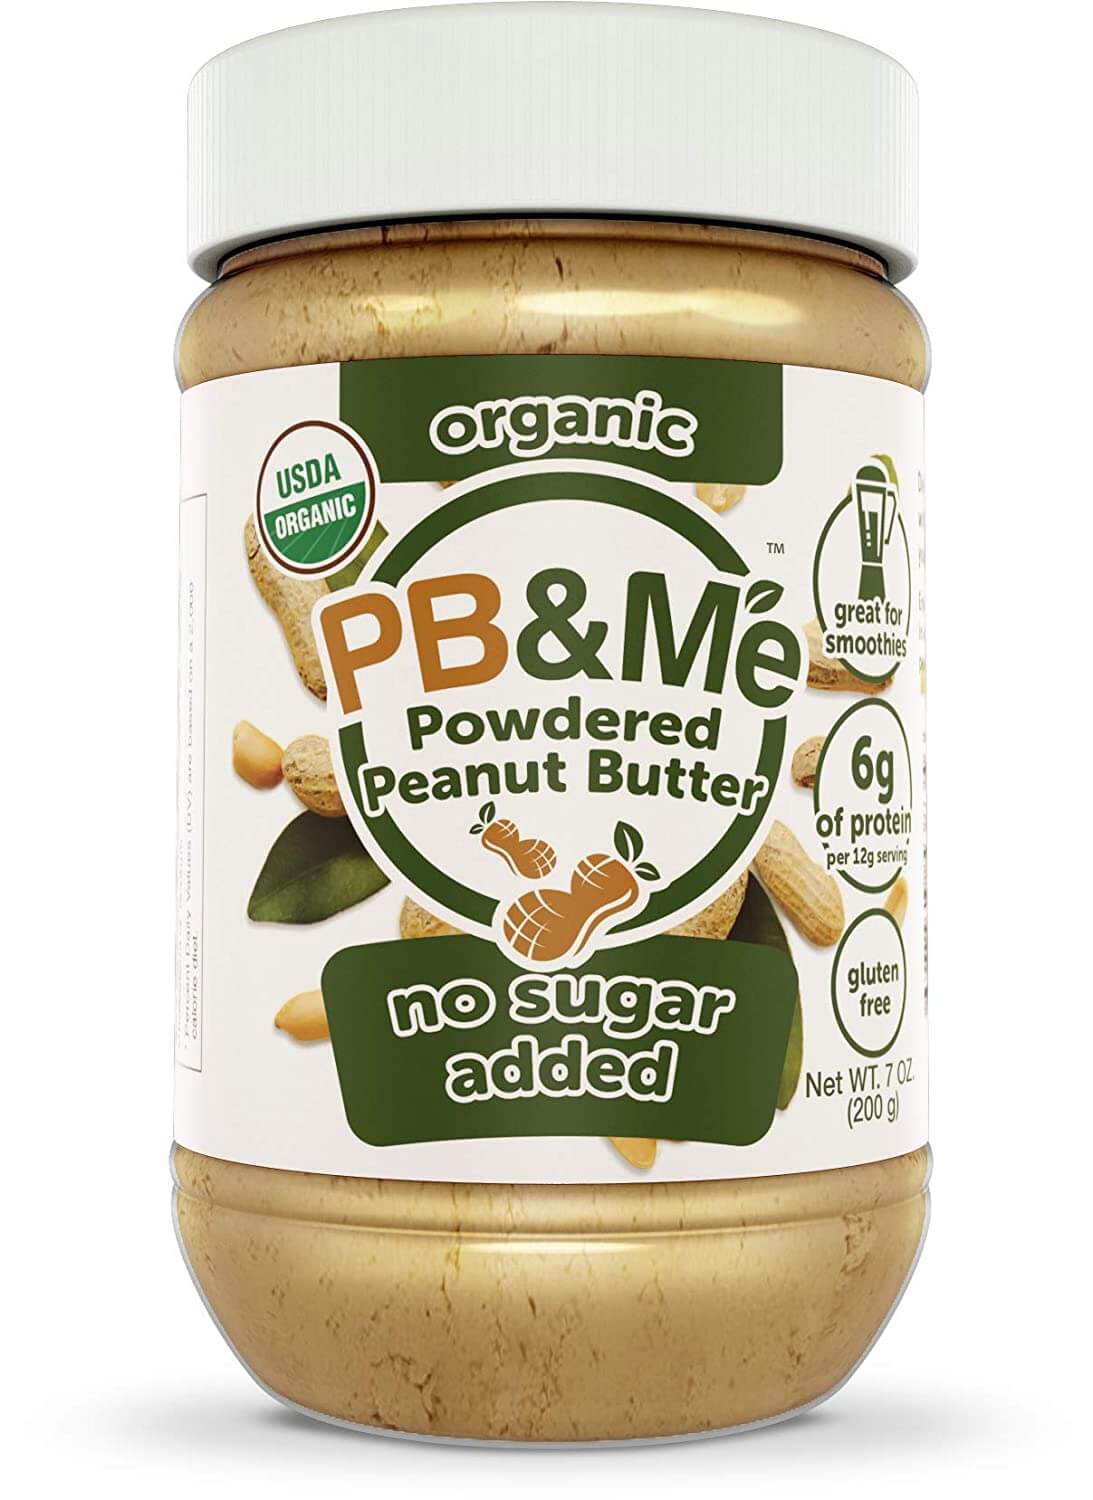 PB&Me USDA Organic Powdered Peanut Butter